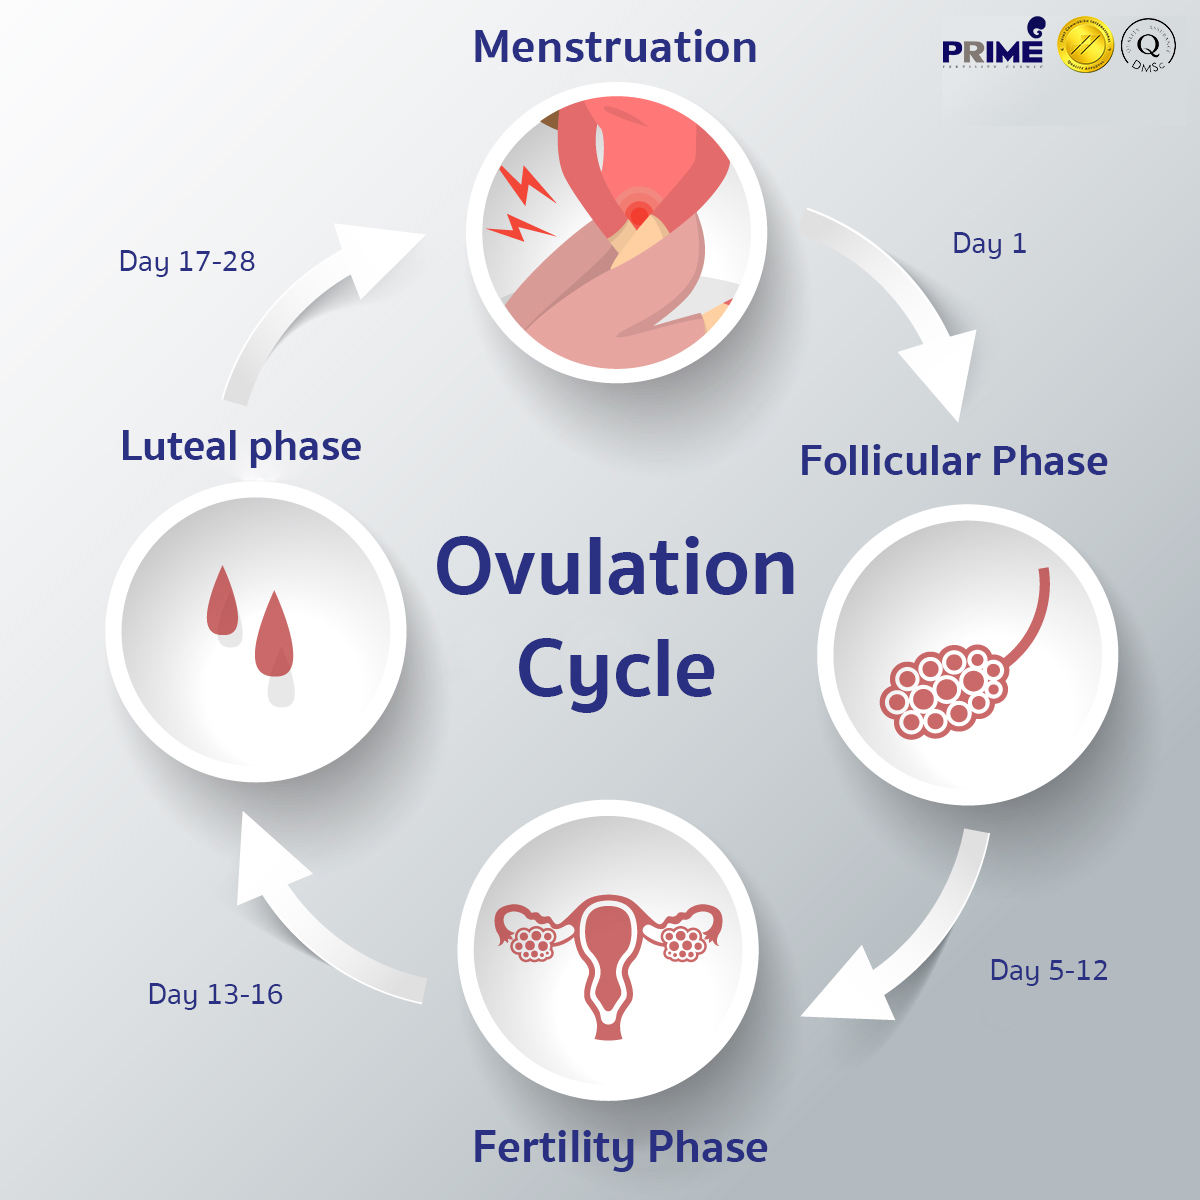 plan b 3 days before ovulation